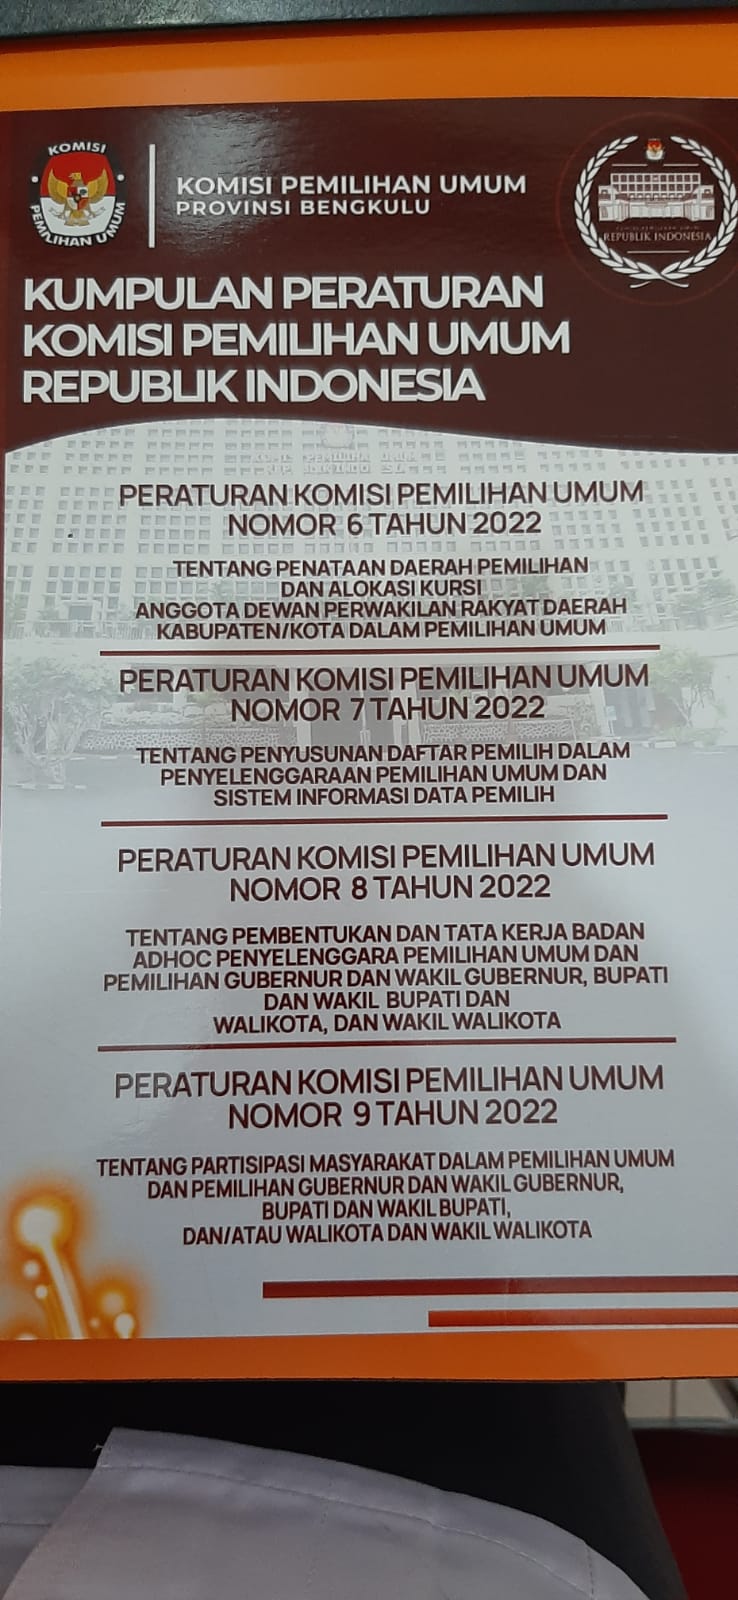 KUMPULAN PERATURAN KOMISI PEMILIHAN UMUM REPUBLIK INDONESIA